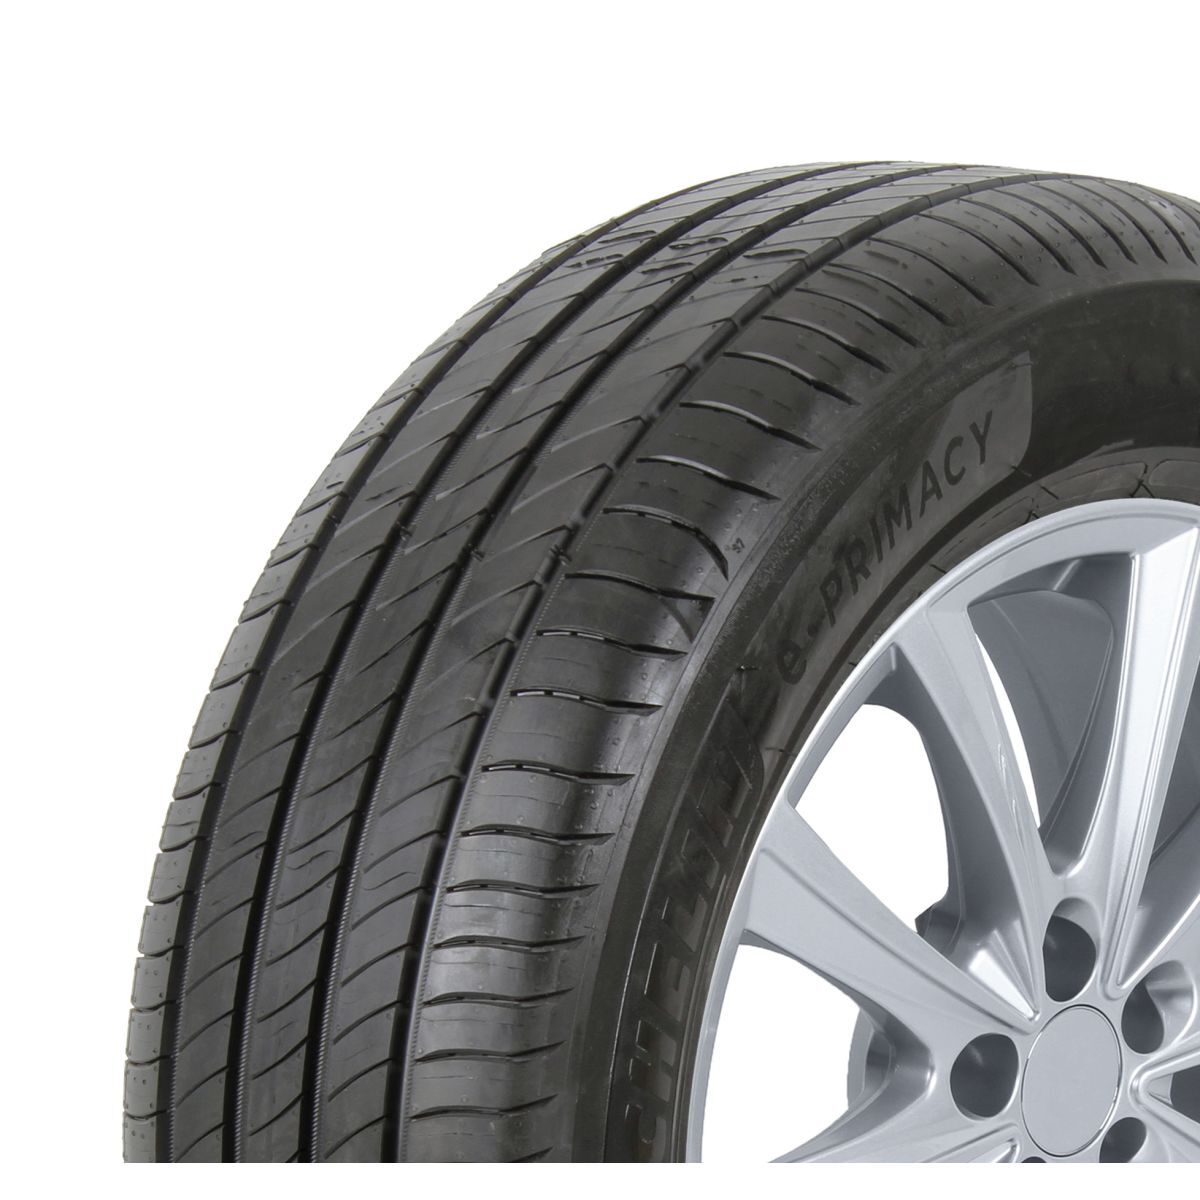 Neumáticos de verano MICHELIN E Primacy 225/45R17 XL 94W